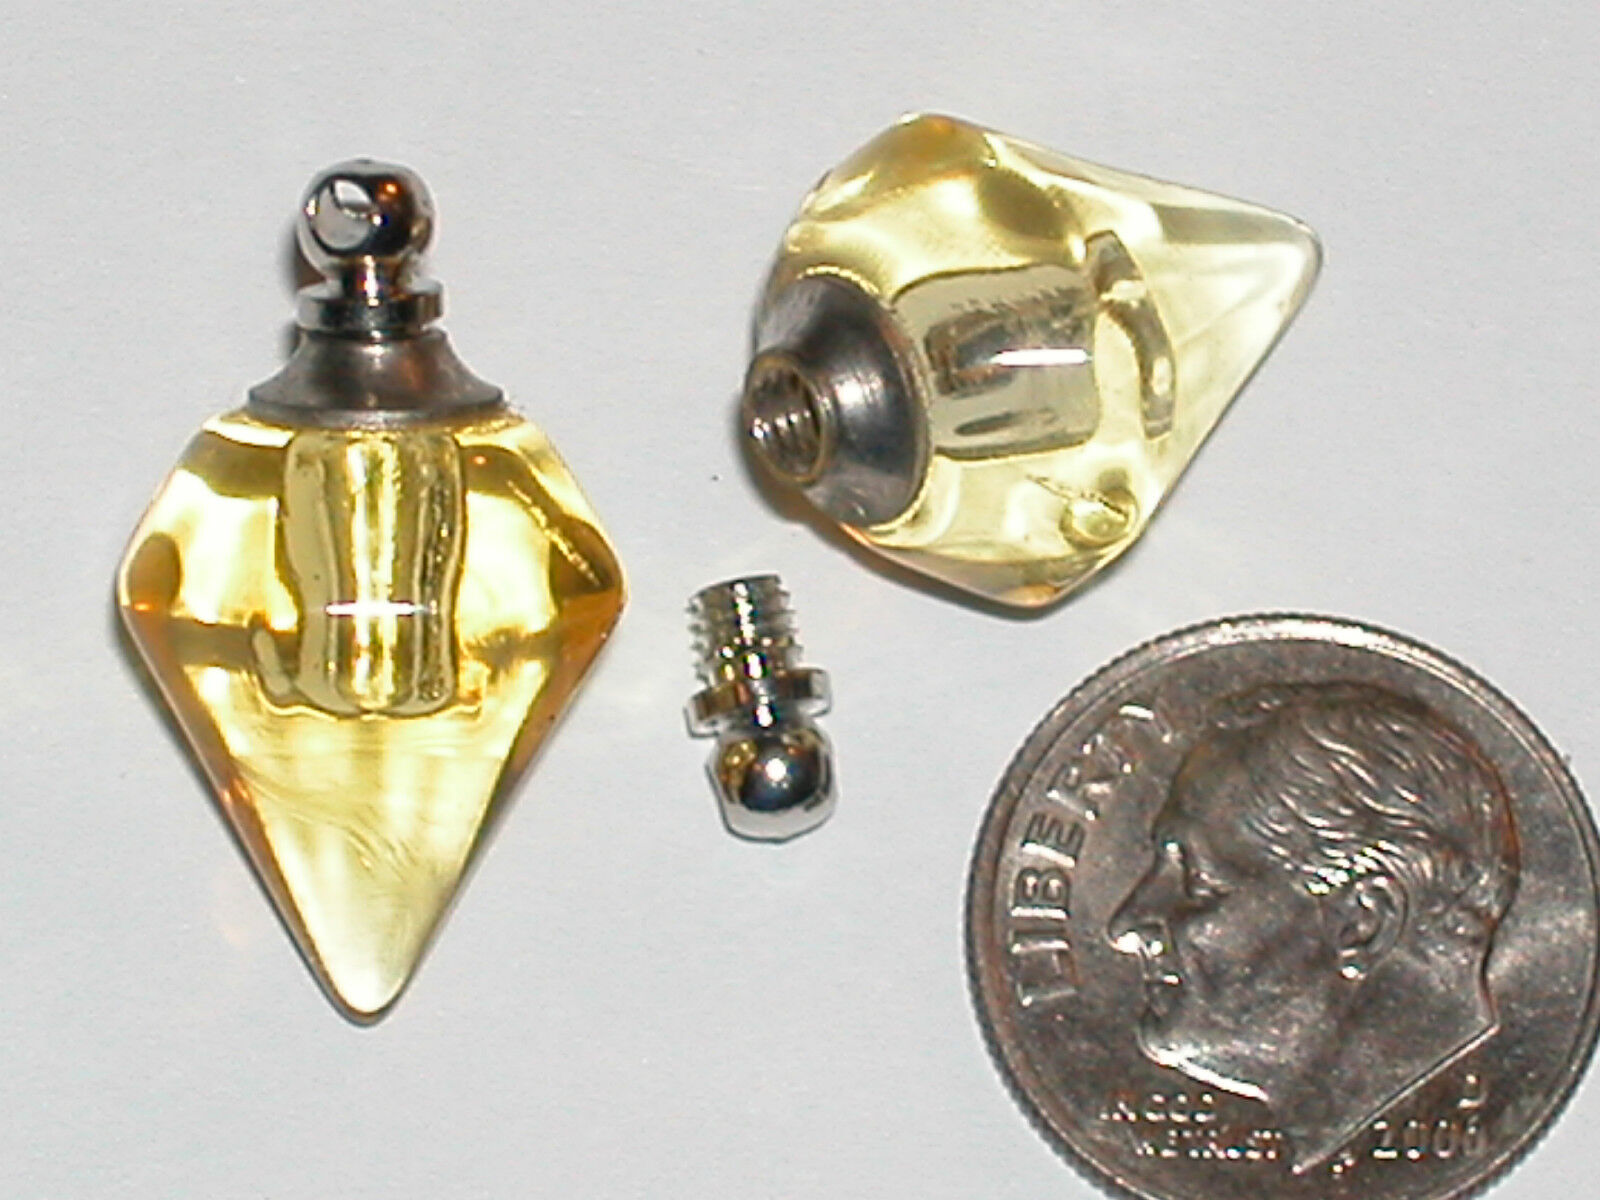 Yellow diamond shaped Glass Perfume necklace vial pendant bead bottle SCREW CAP